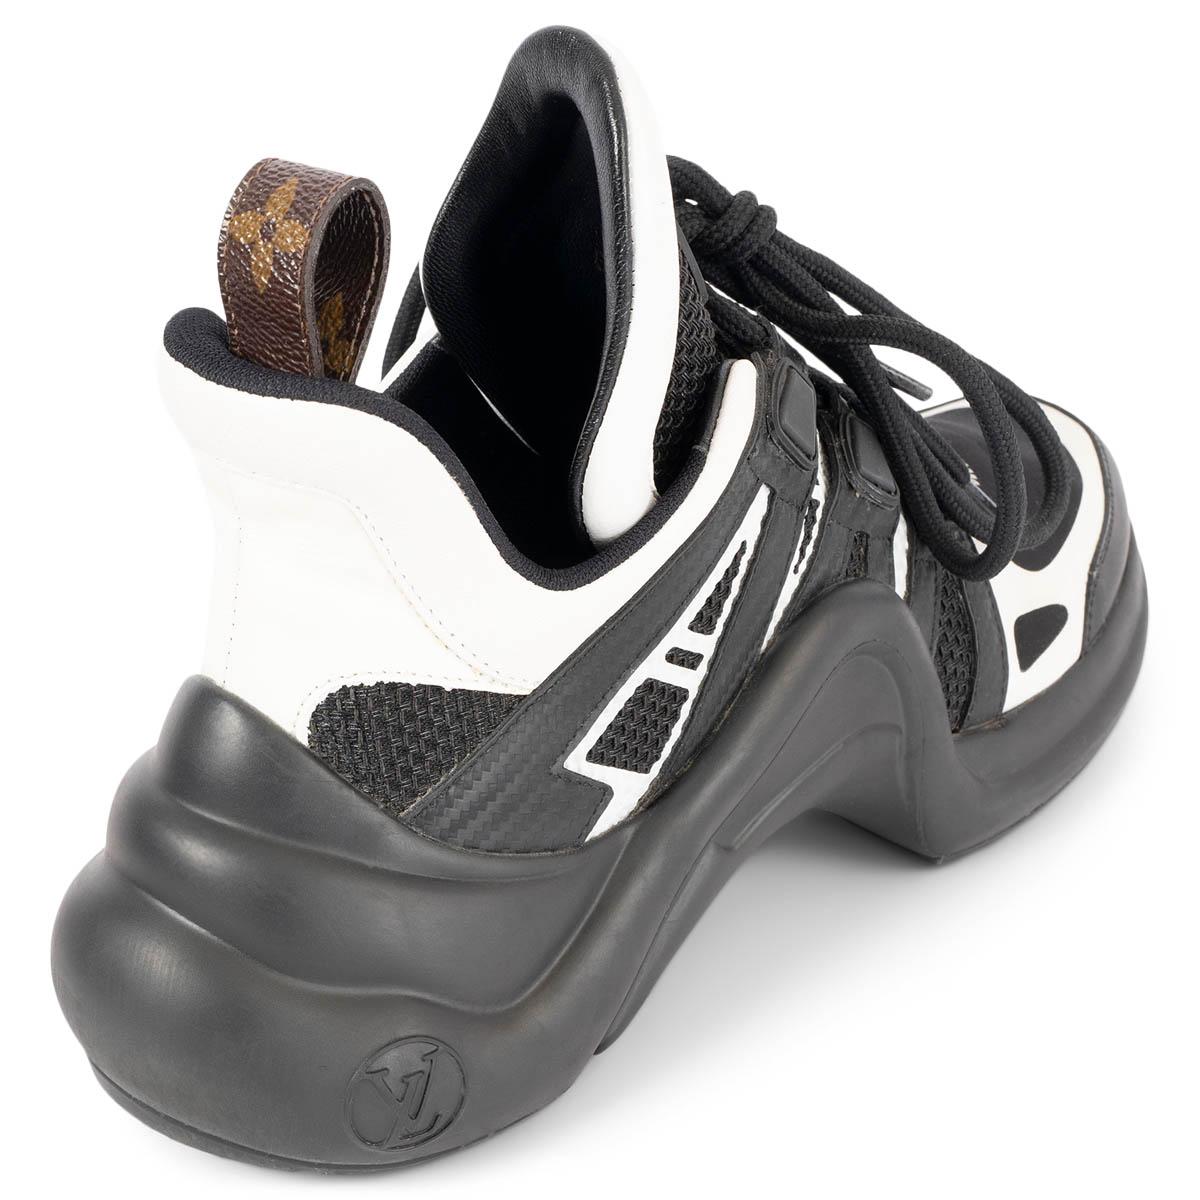 LOUIS VUITTON black & white leather & mesh ARCHLIGHT Shoes 36 For Sale 3